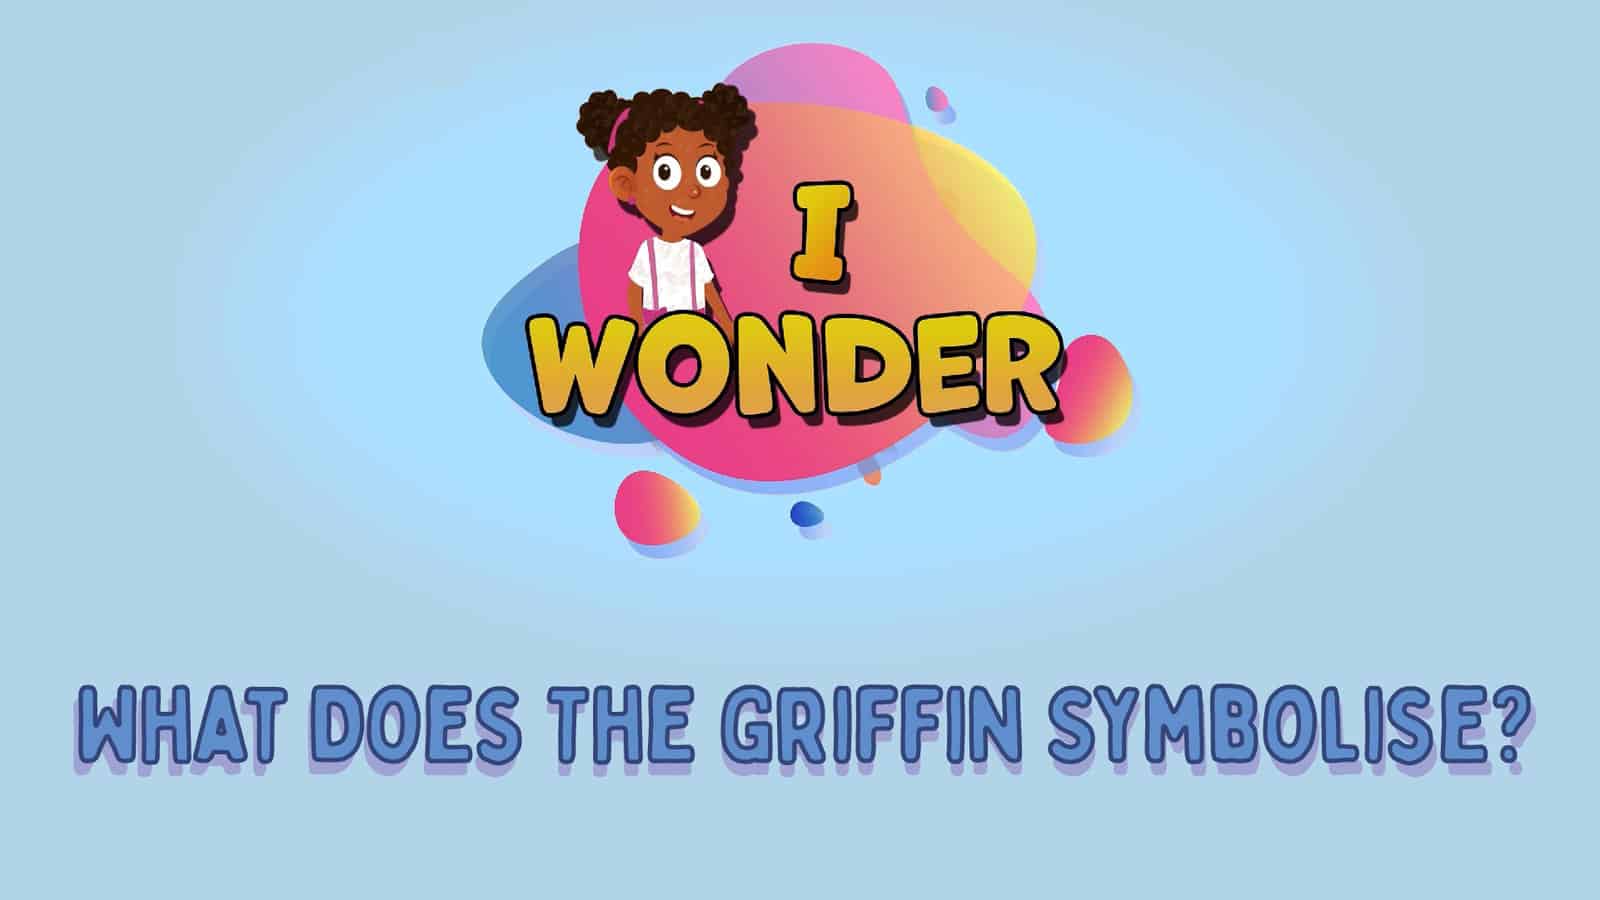 The Griffin Symbolise LearningMole